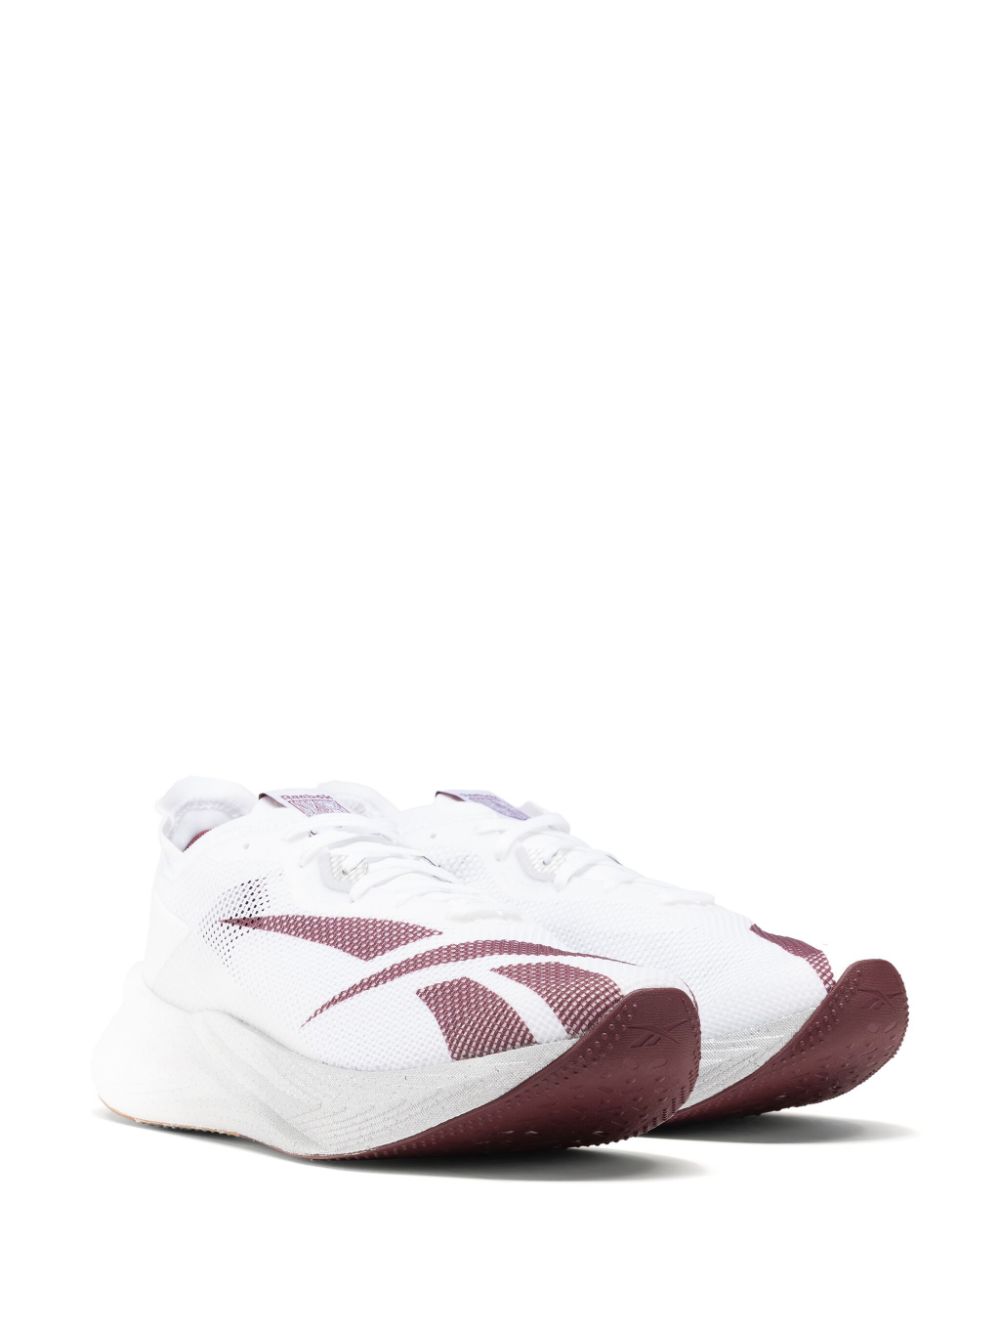 Reebok Floatride Energy X sneakers - White von Reebok